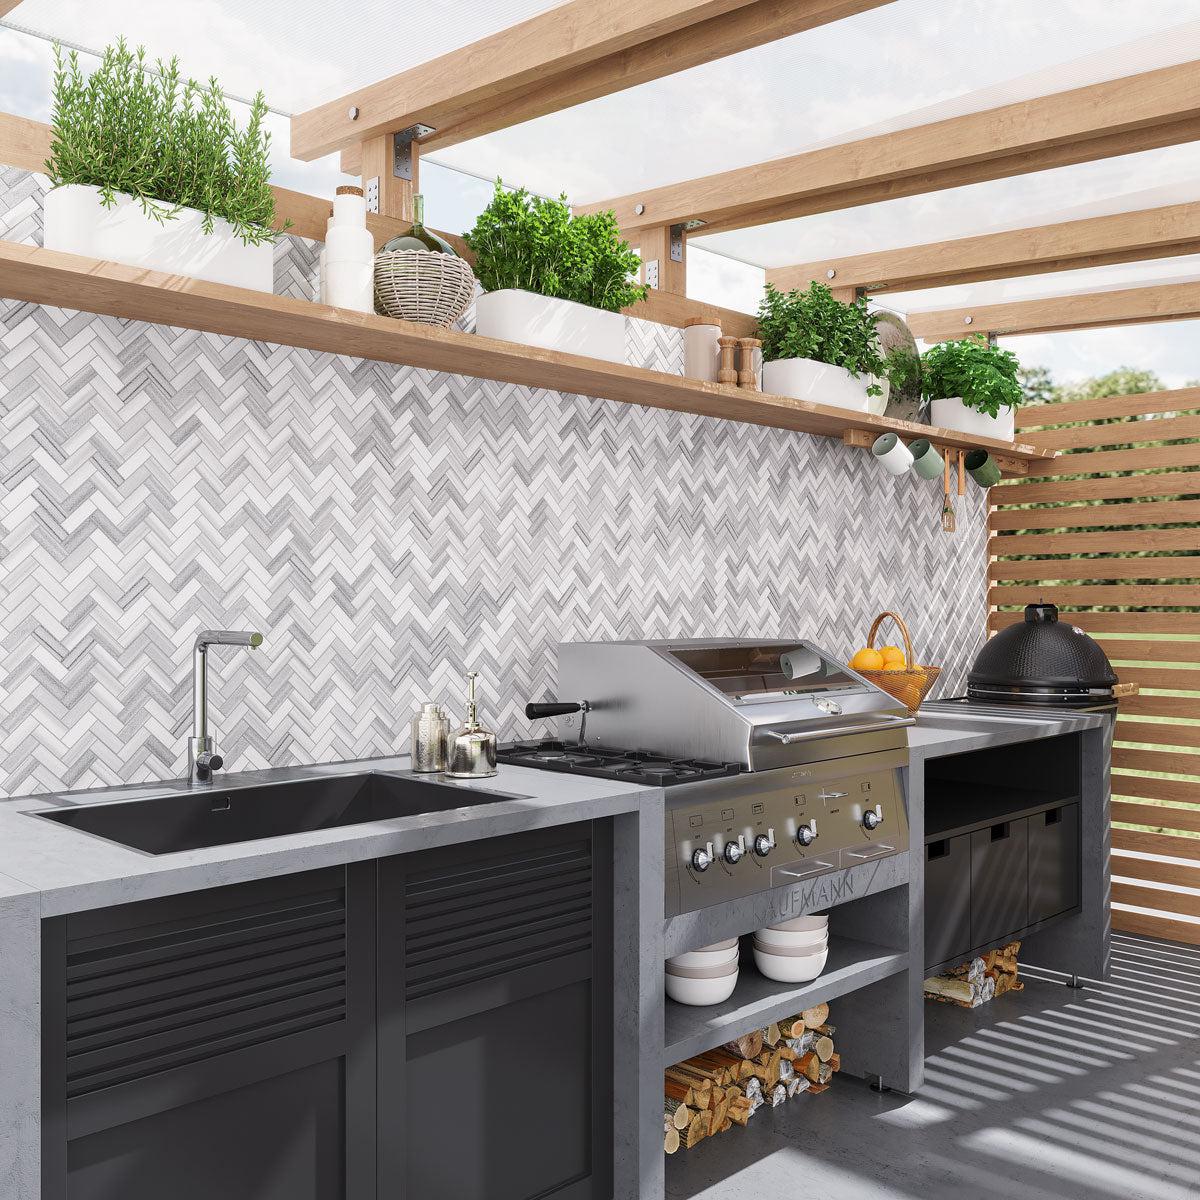 Outdoor kitchen and grill area with Equator Herringbone Polished Mosaic Tile backsplash